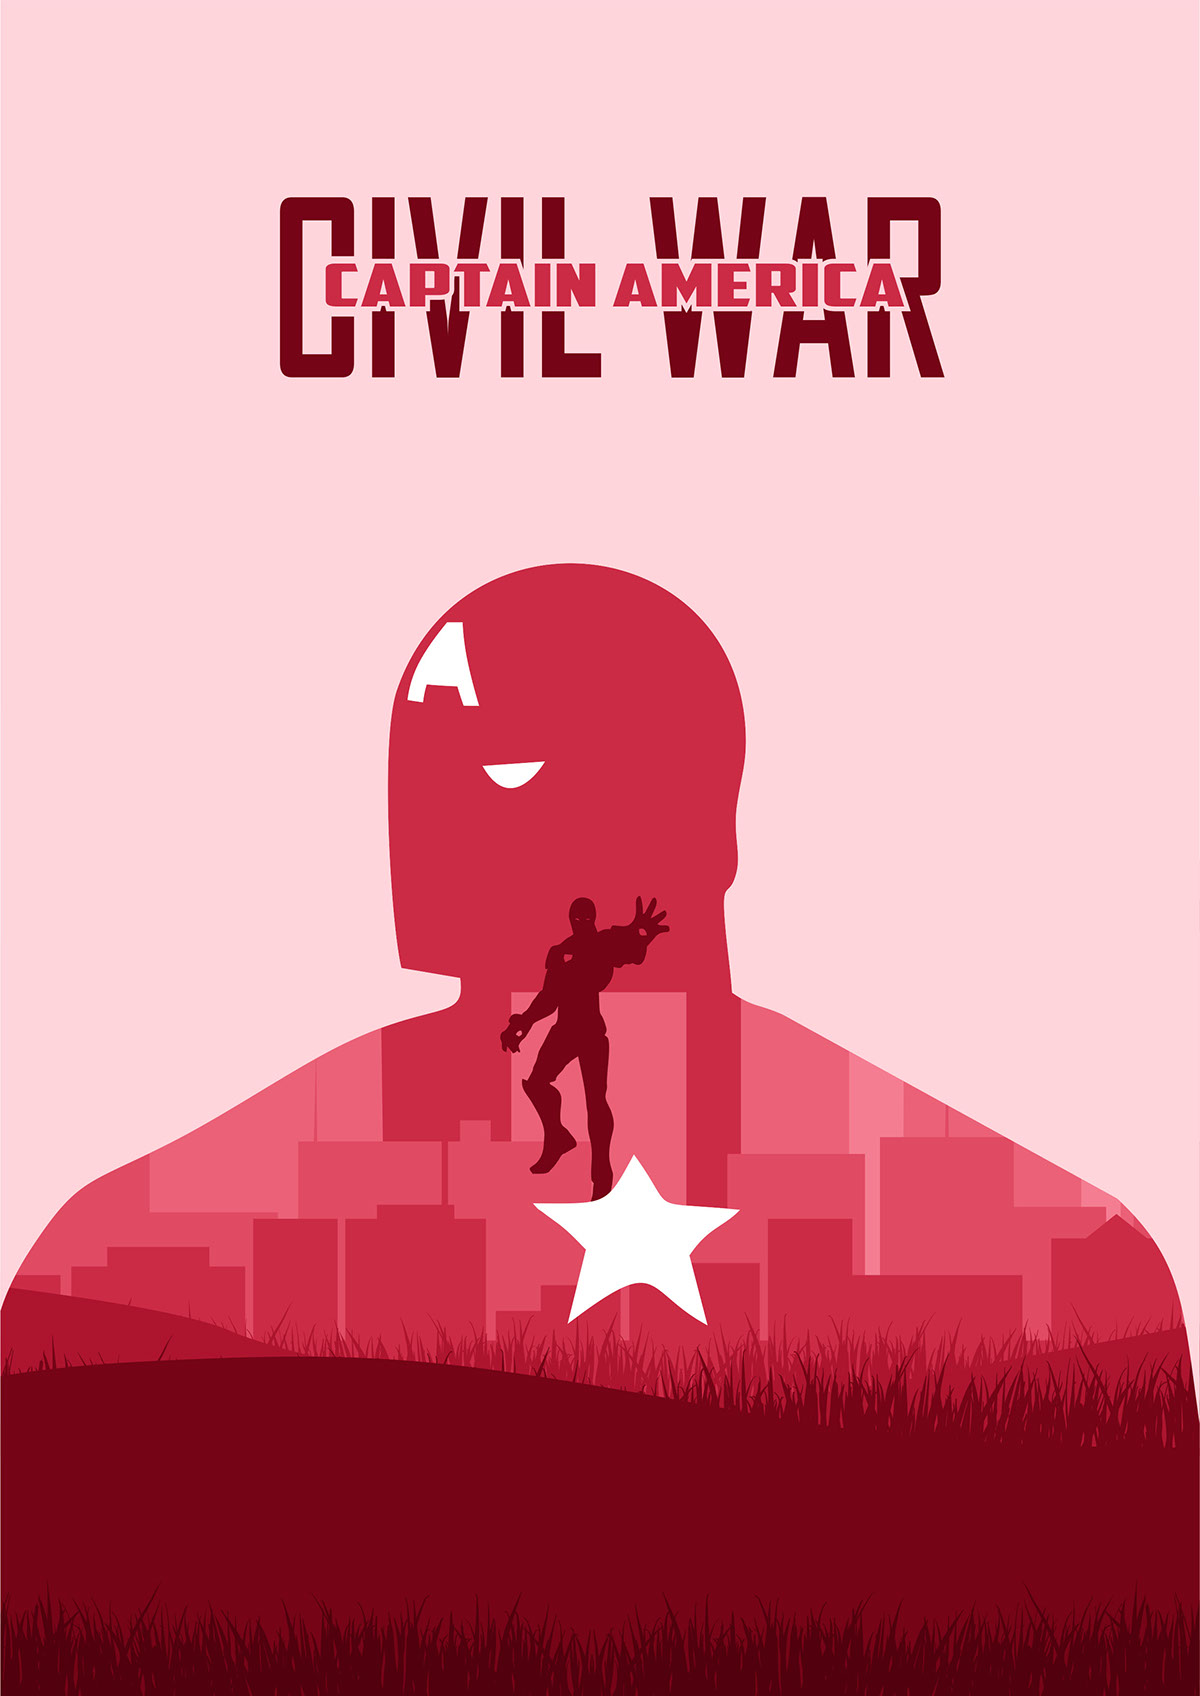 Civil War captain america mcu iron man teamcap teamironman Stark tony stark Mondo poster flat design goodmorningnight febrian anugrah